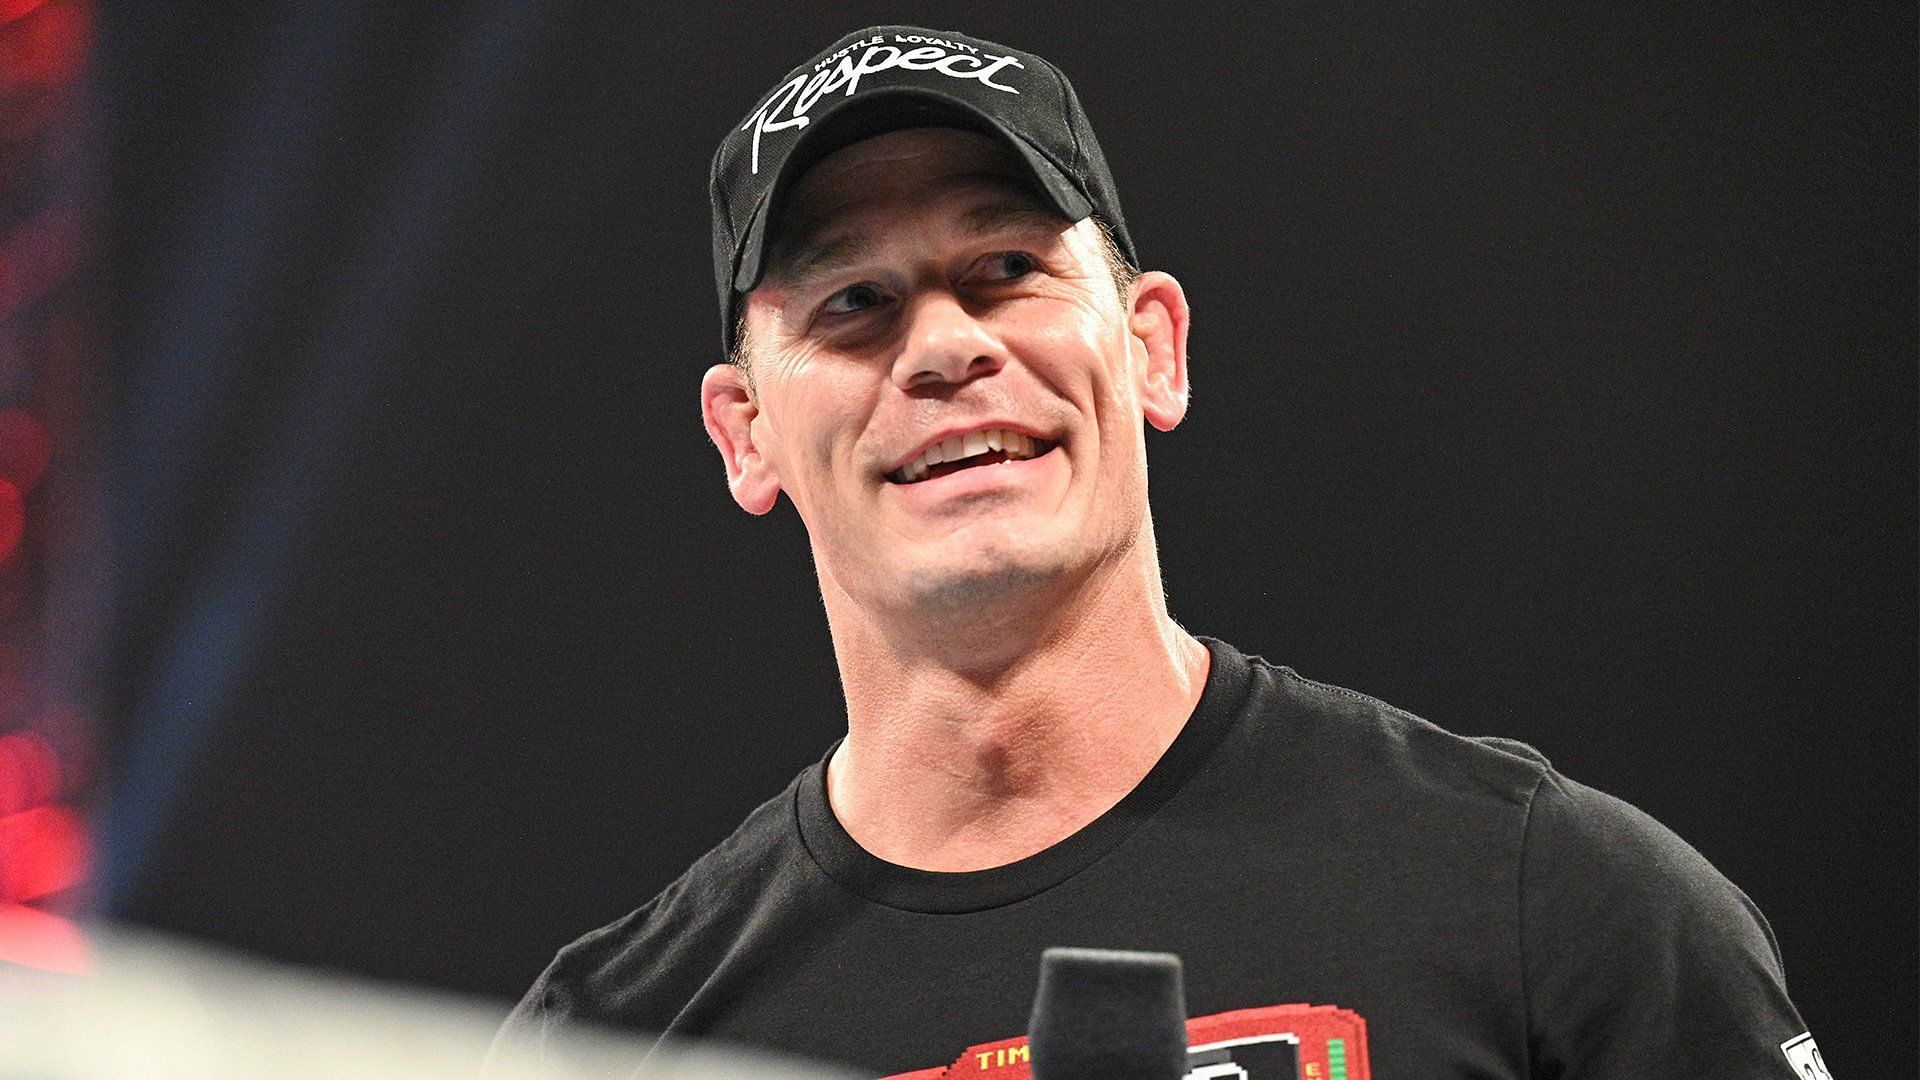 John Cena is a 16-time world champion